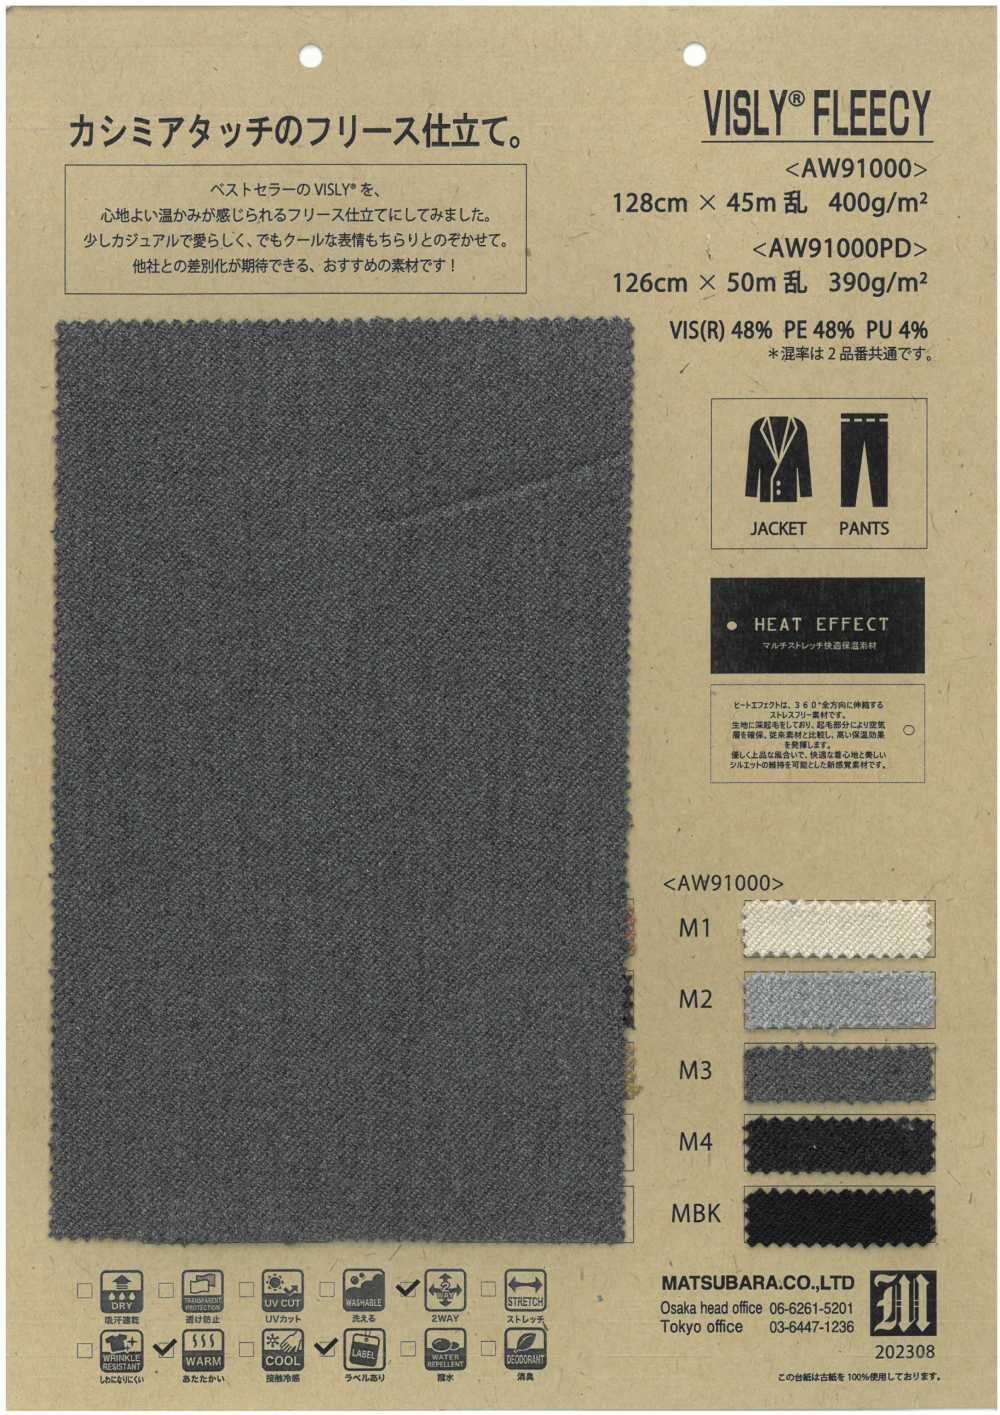 AW91000PD VISLY®️FLEECY[Textilgewebe] Matsubara